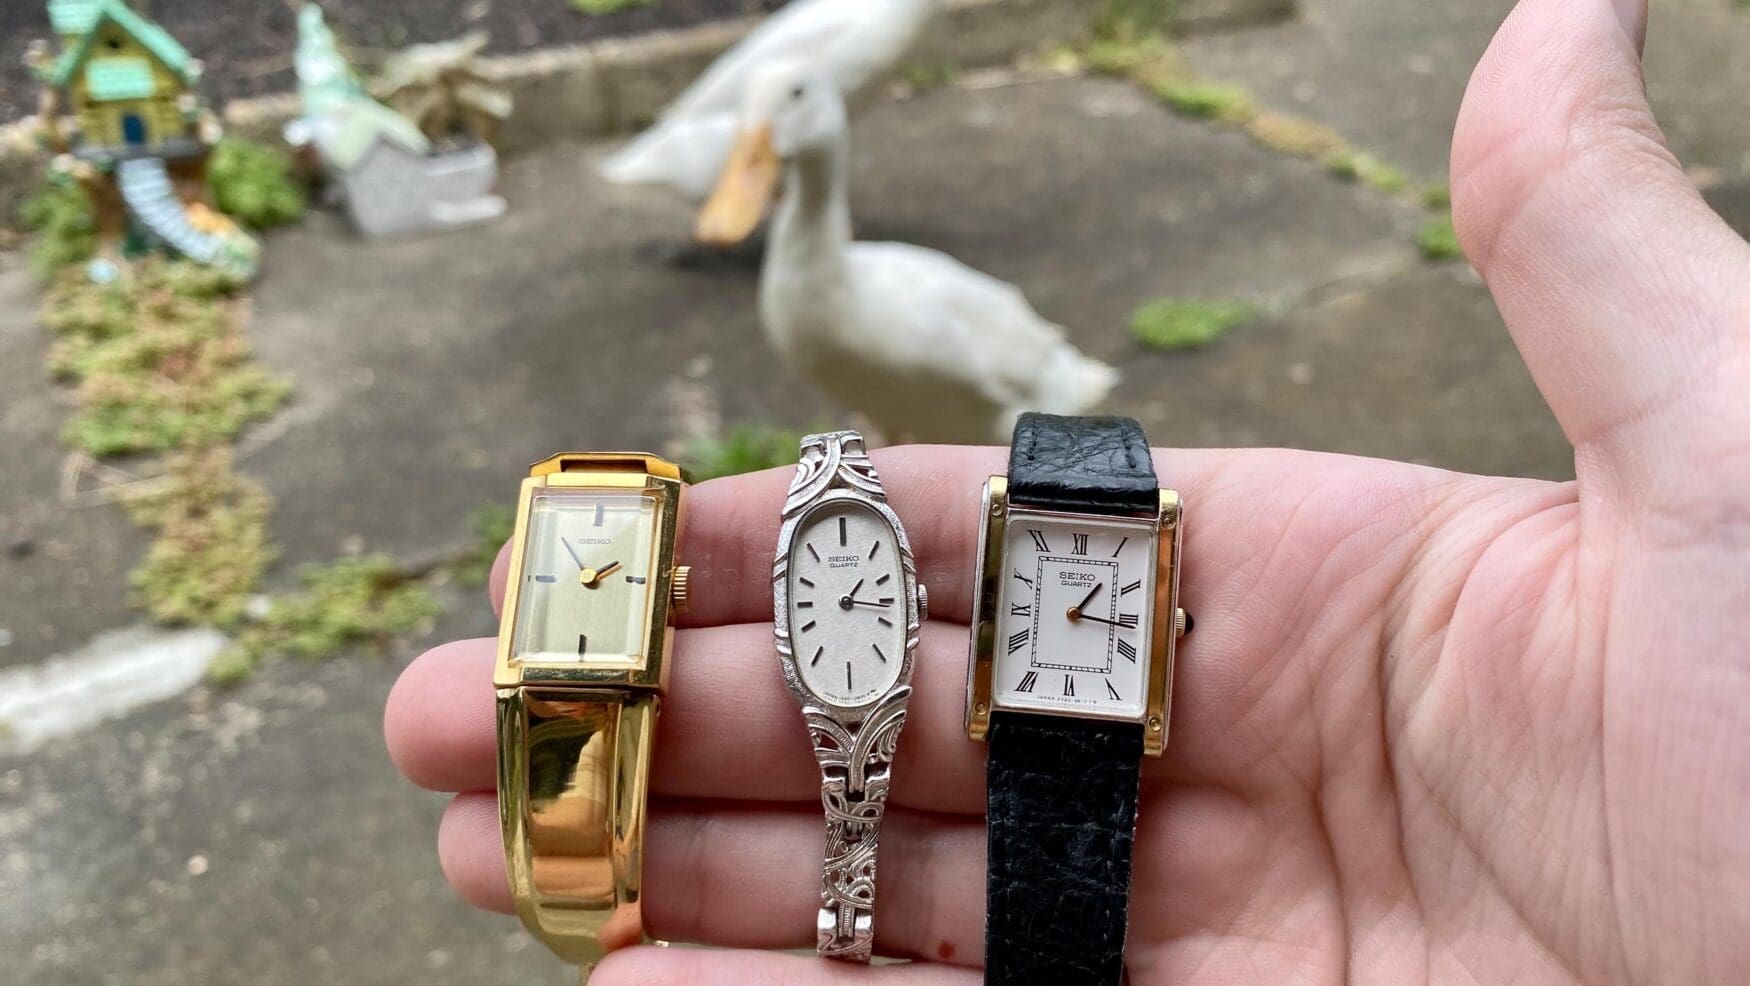 The three watches Buffy wore most in 2023 – Seiko, Seiko, and Seiko